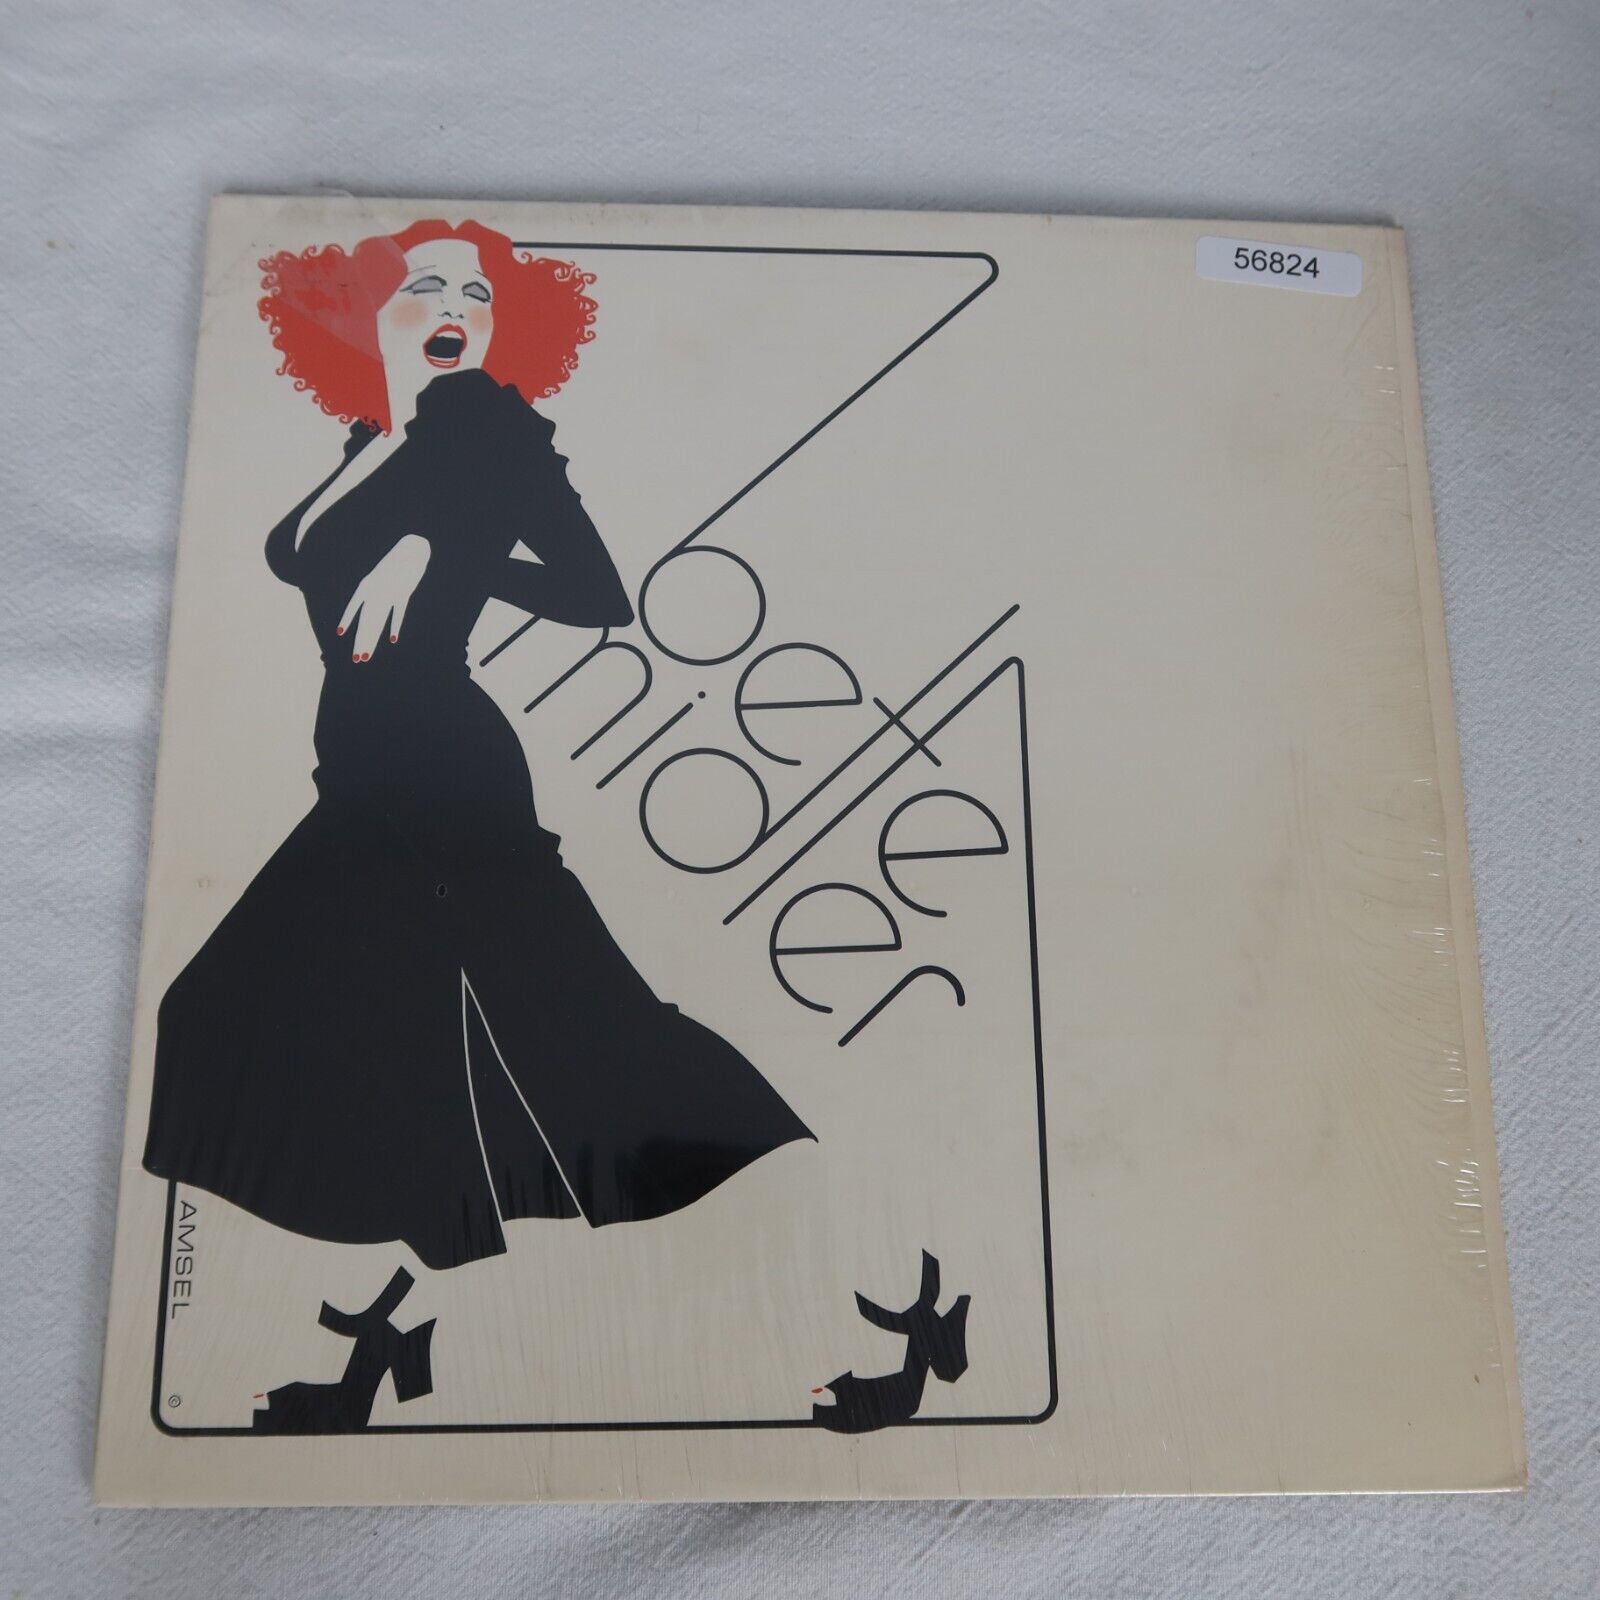 Bette Midler Self Titled w/ Shrink LP Vinyl Record Album